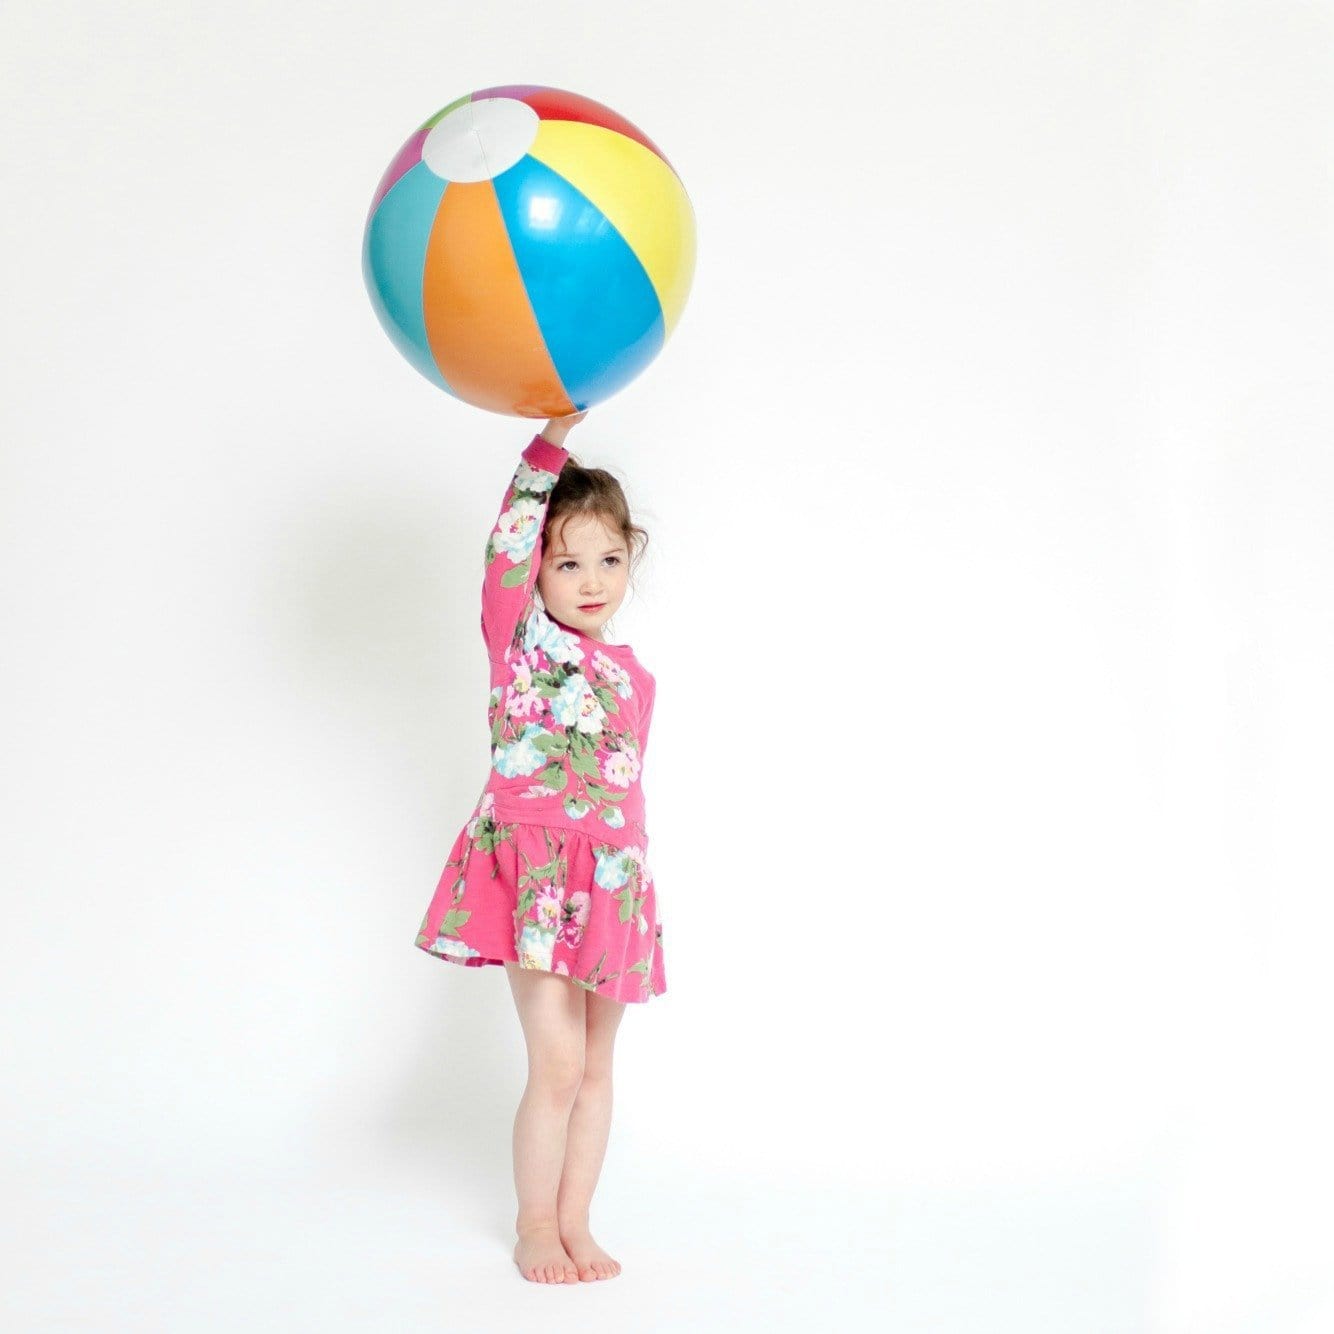 Beachball Balloon | Kids Party Balloons | Giant Foil Balloon Shapes Anagram